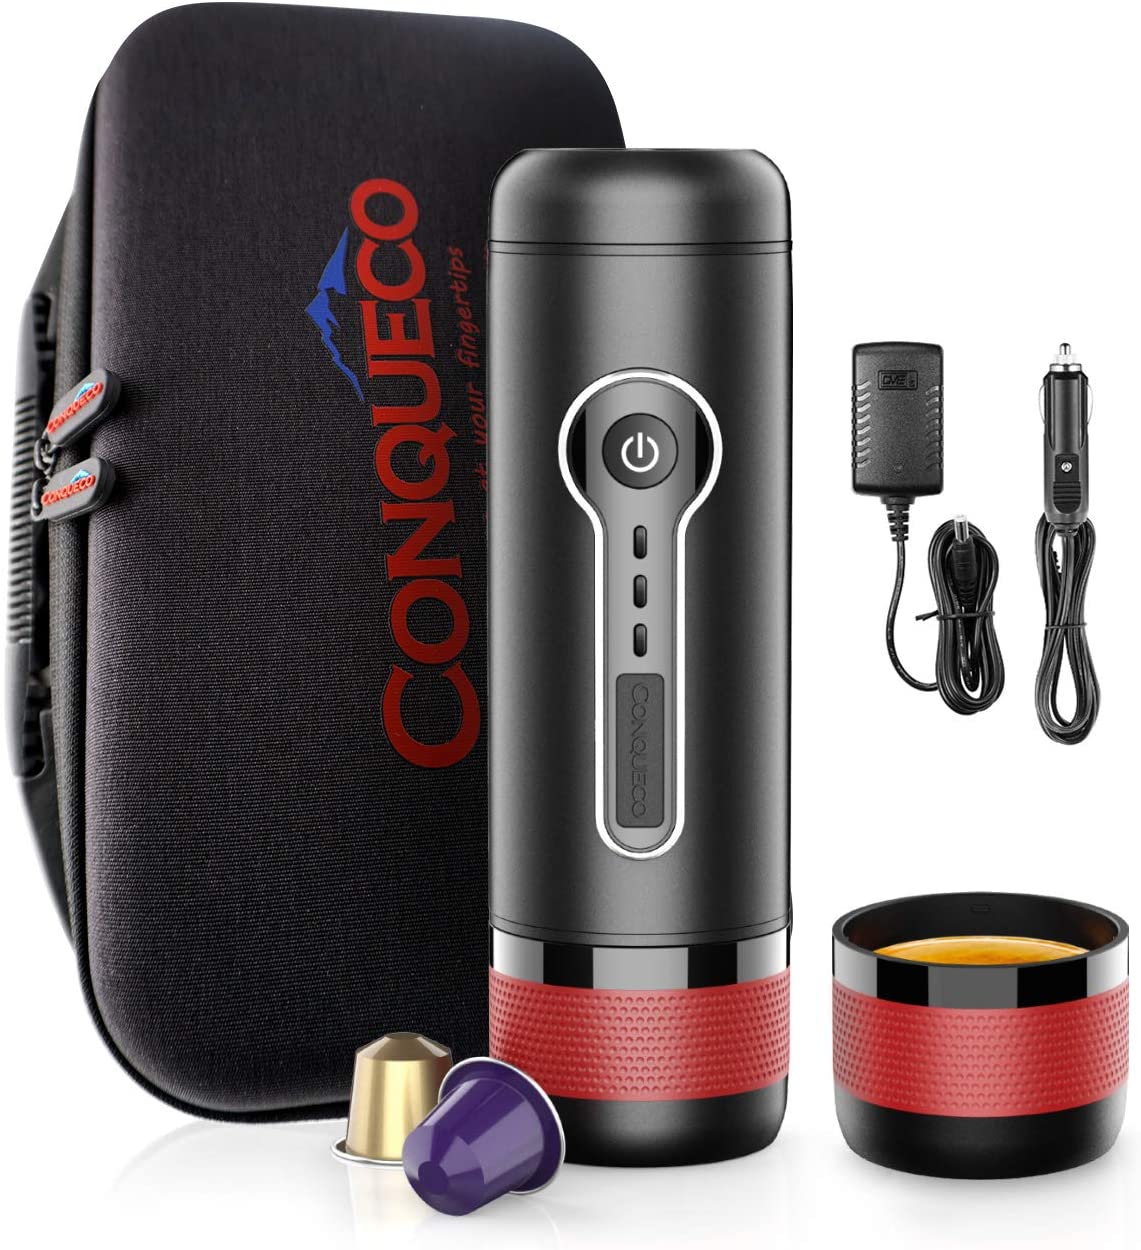 CONQUECO Portable Coffee Maker